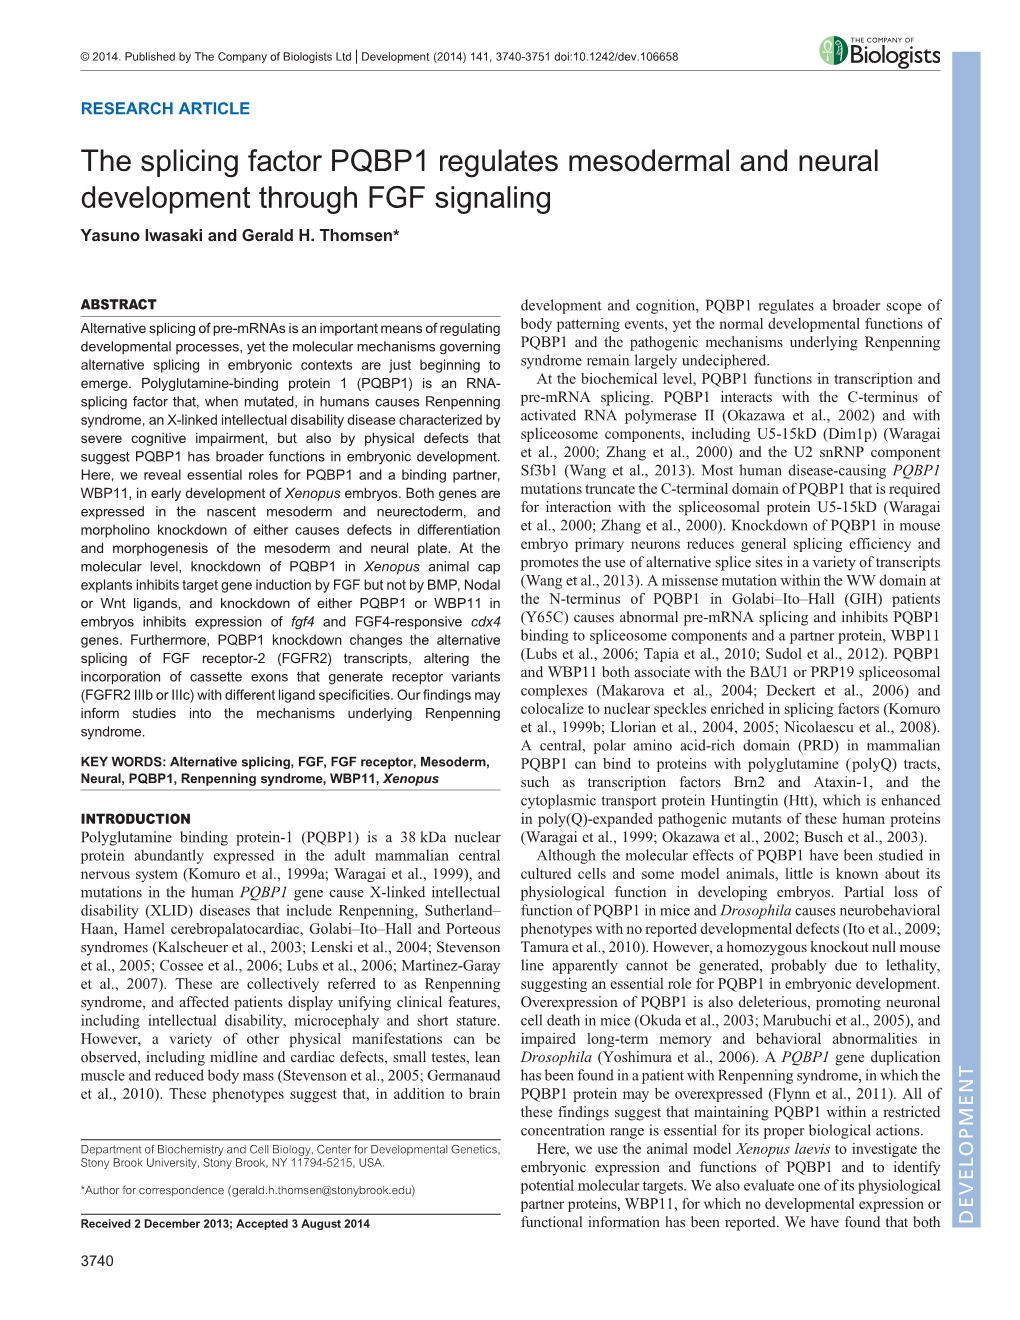 The Splicing Factor PQBP1 Regulates Mesodermal and Neural Development Through FGF Signaling Yasuno Iwasaki and Gerald H